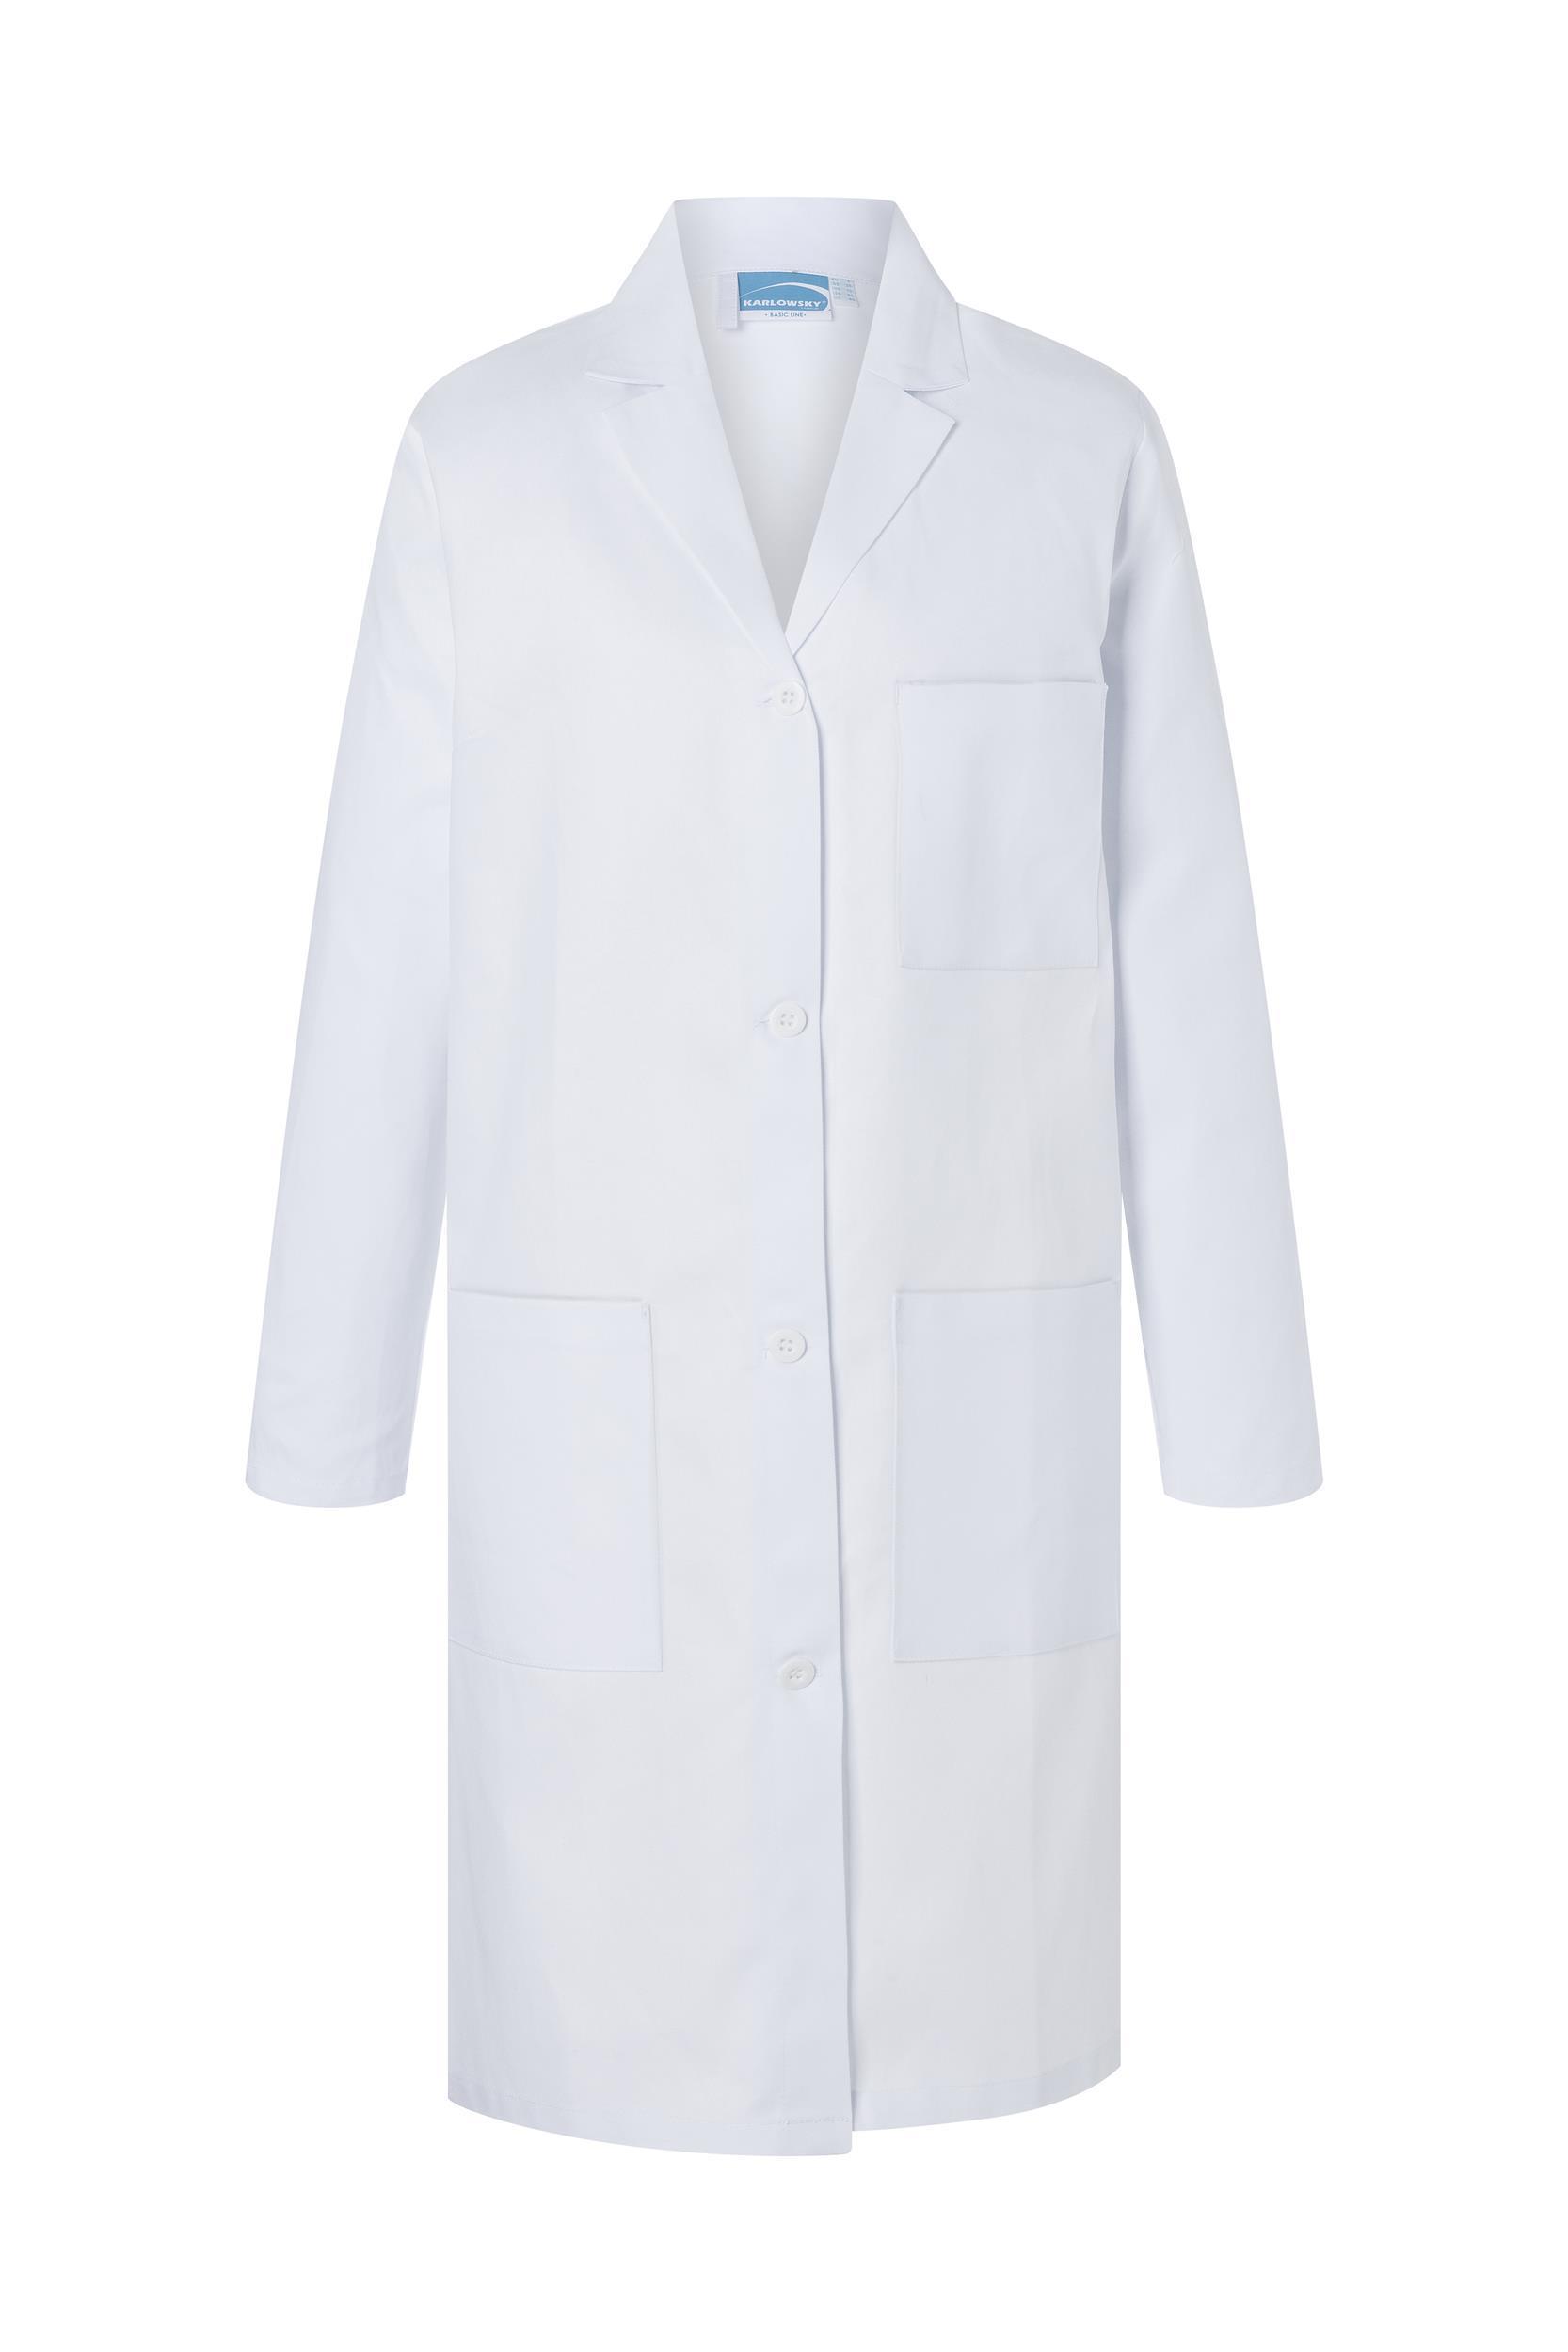 Ladies lab coat cotton 205 g/m² Karlowsky® White L